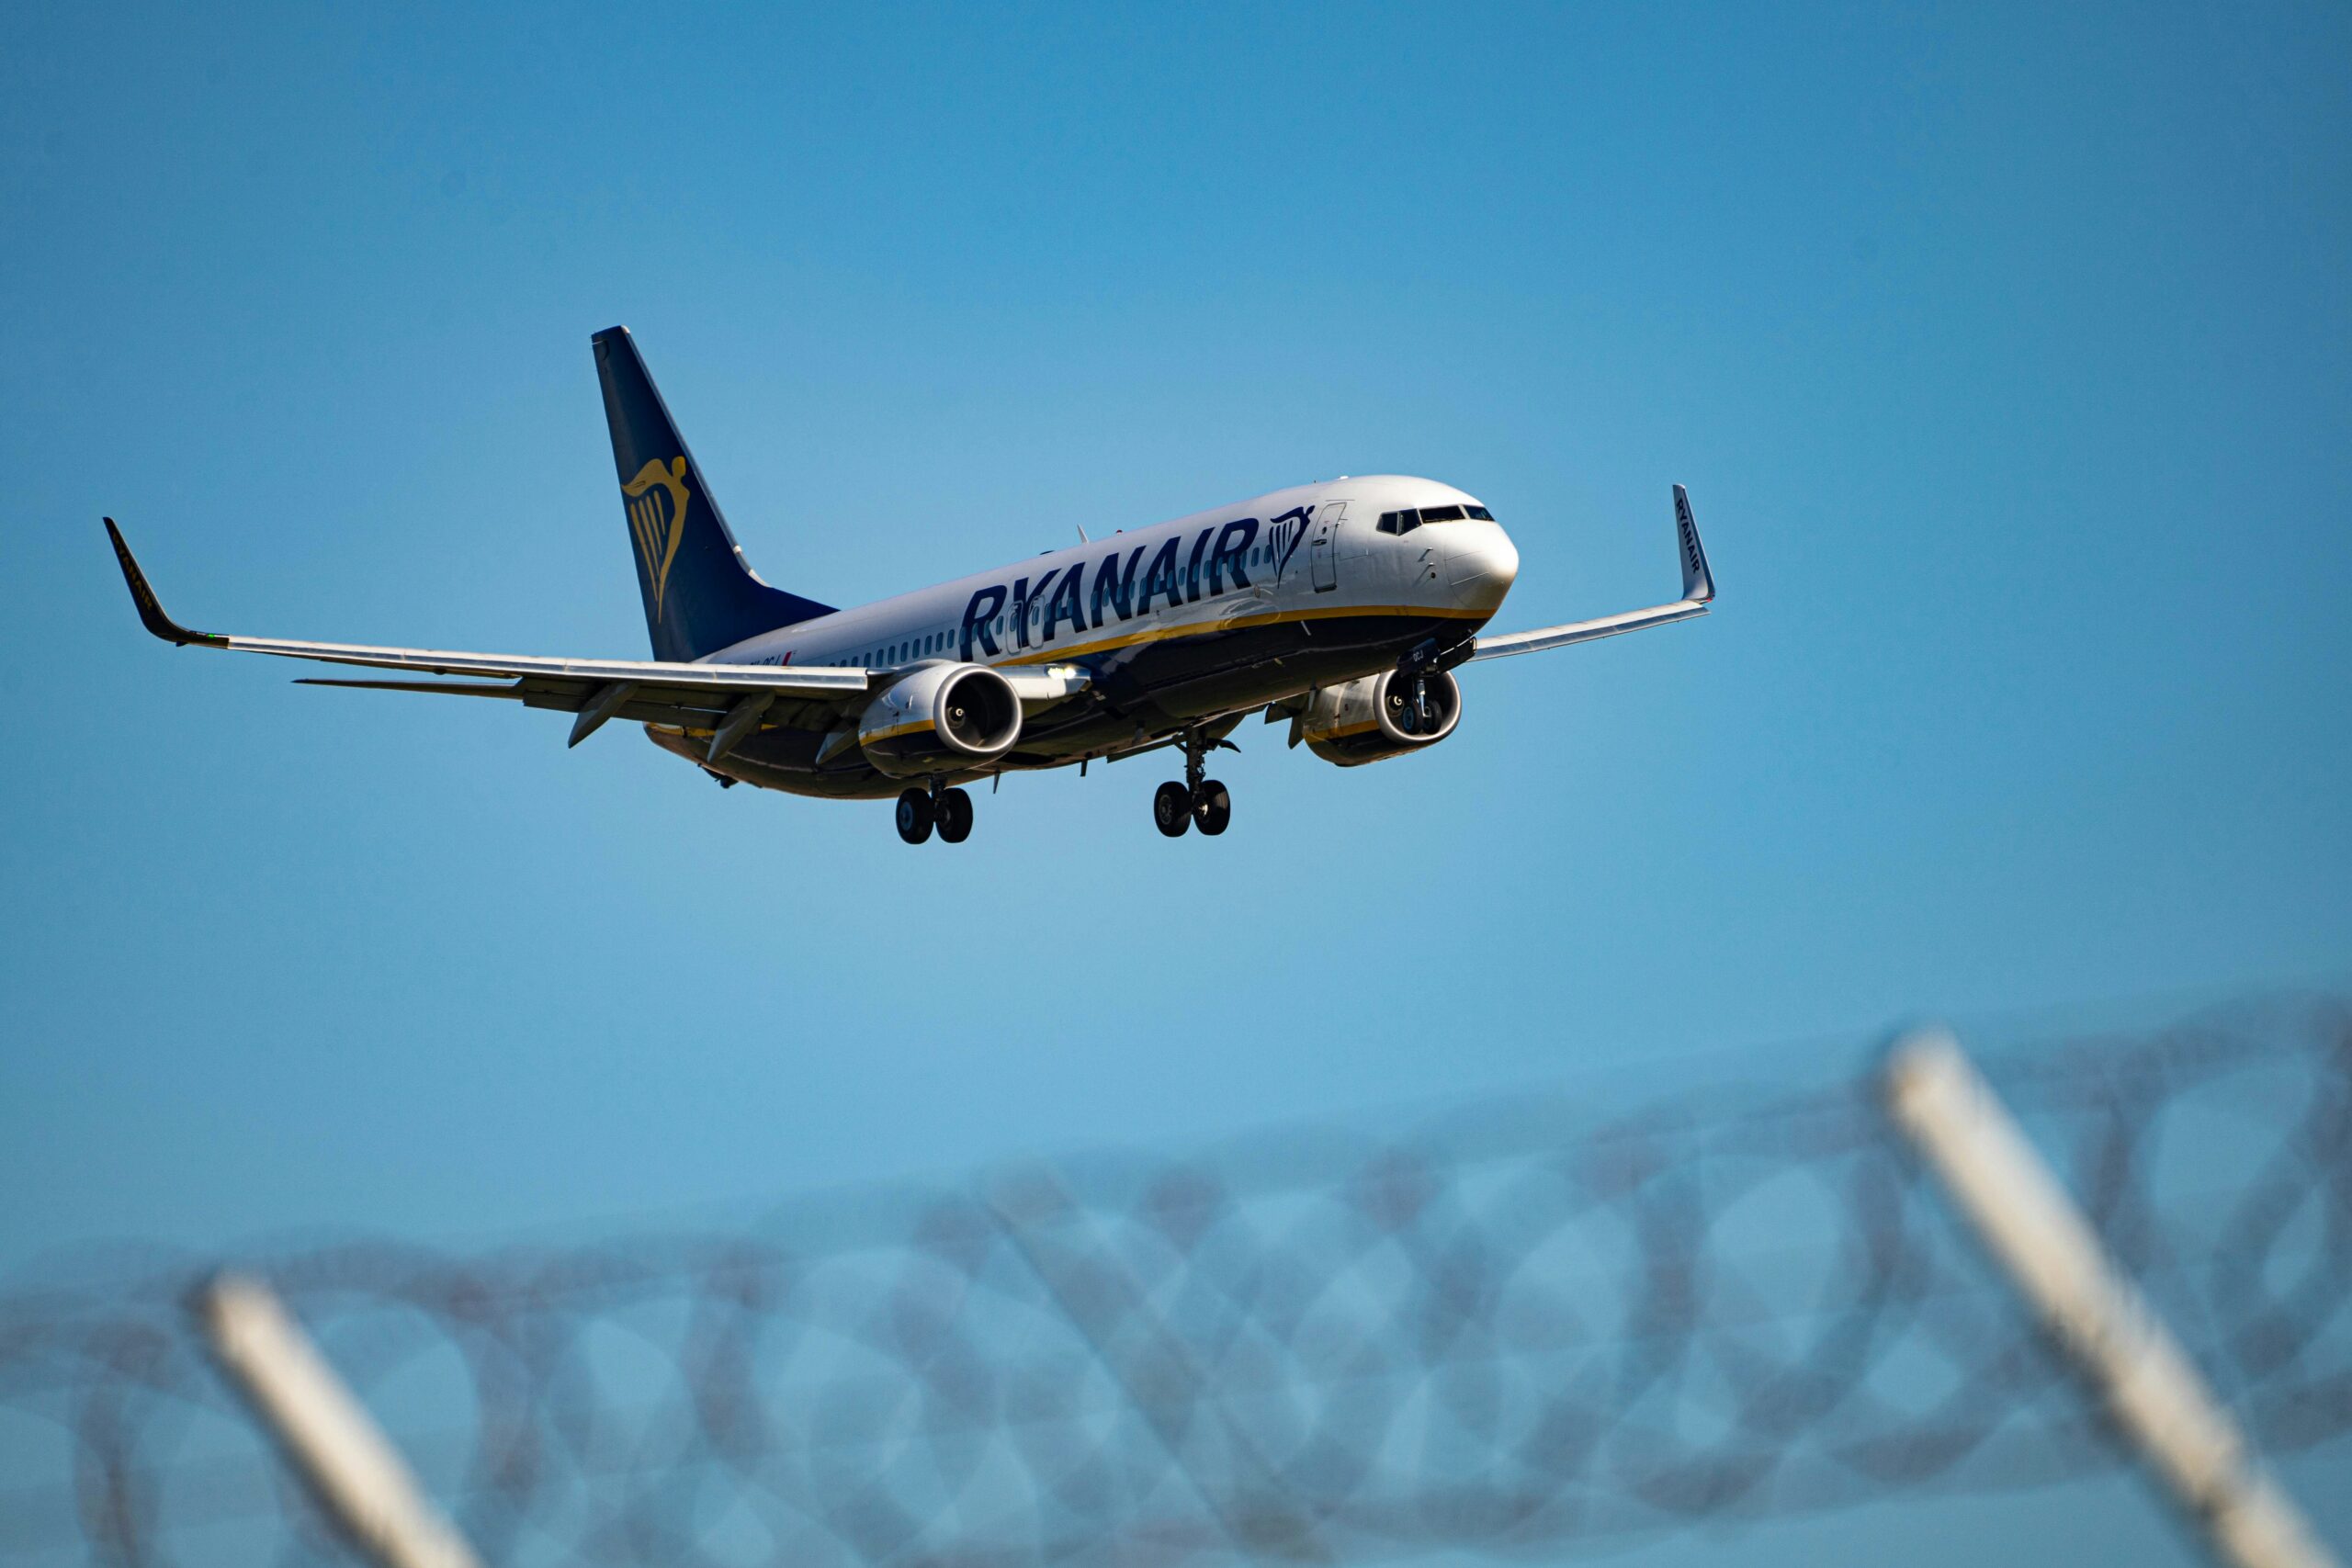 The Ministry of Tourism clarifies regarding Ryanair flights